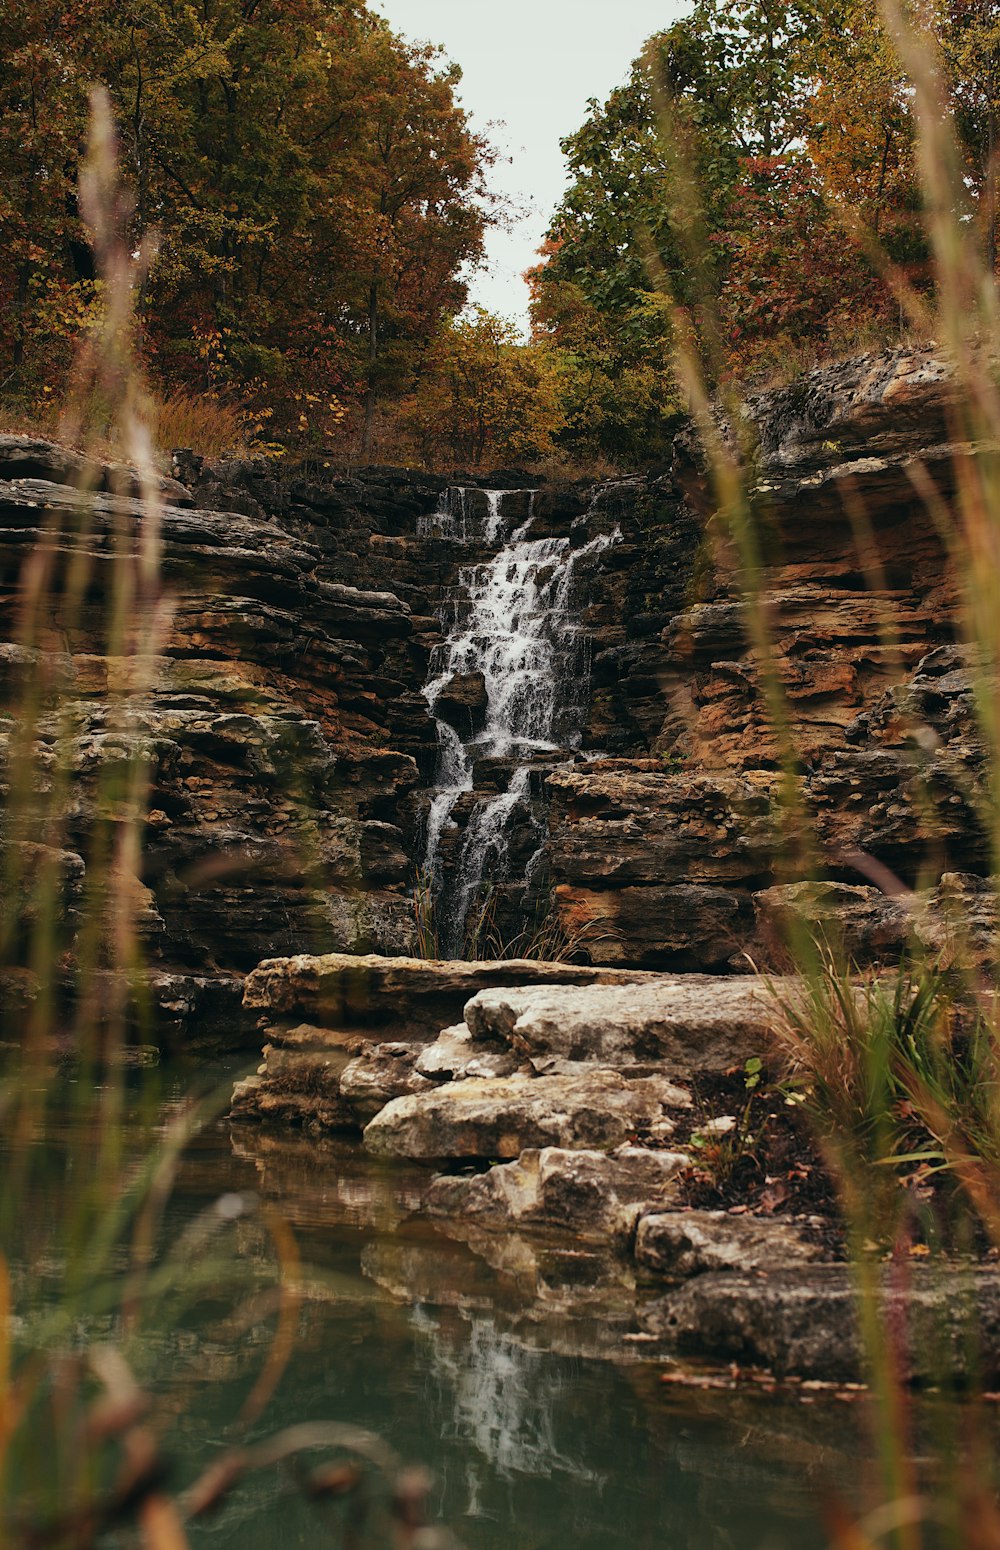 water falls on brown rocks